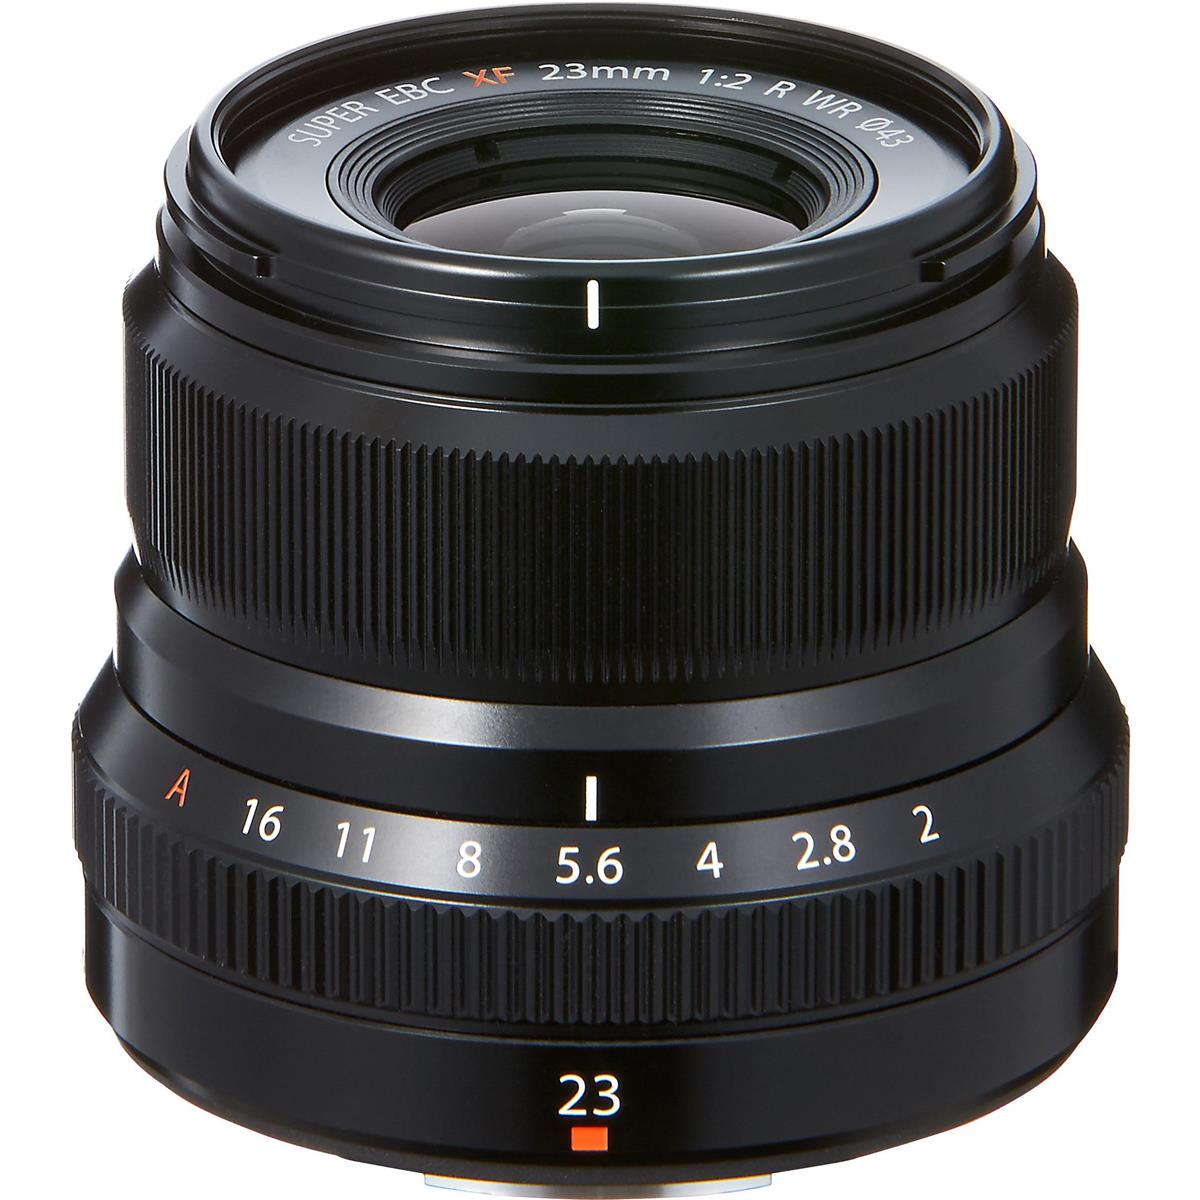 

Fujifilm XF 23mm f/2 R WR Lens, Black